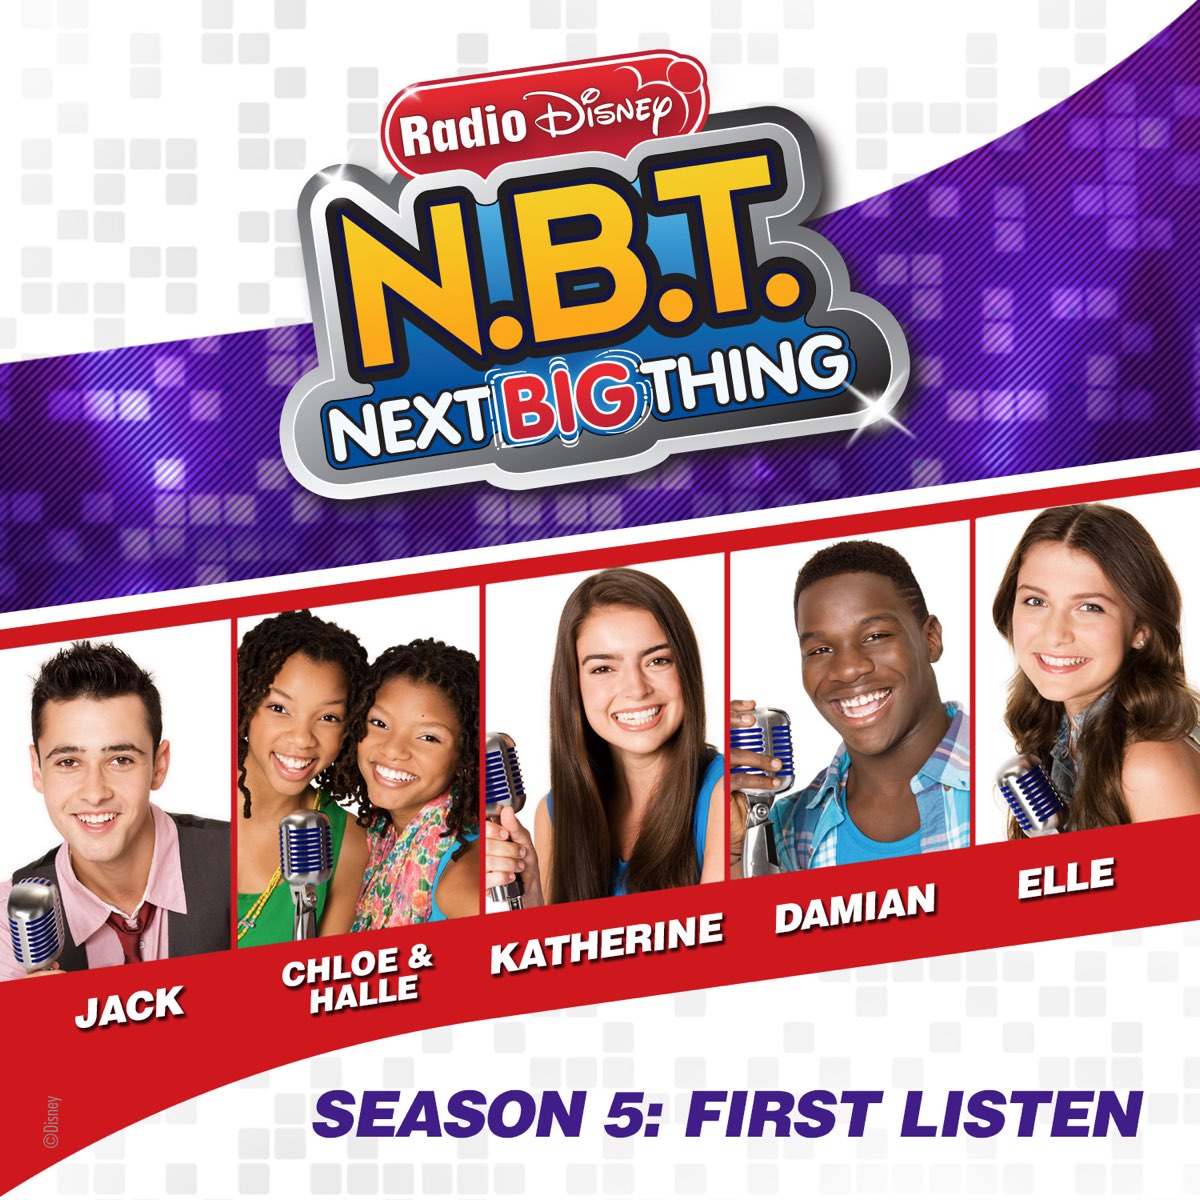 Season 5: First Listen (From Radio Disney "N.B.T." Next BIG Thing) - EP -  Album by Various Artists - Apple Music